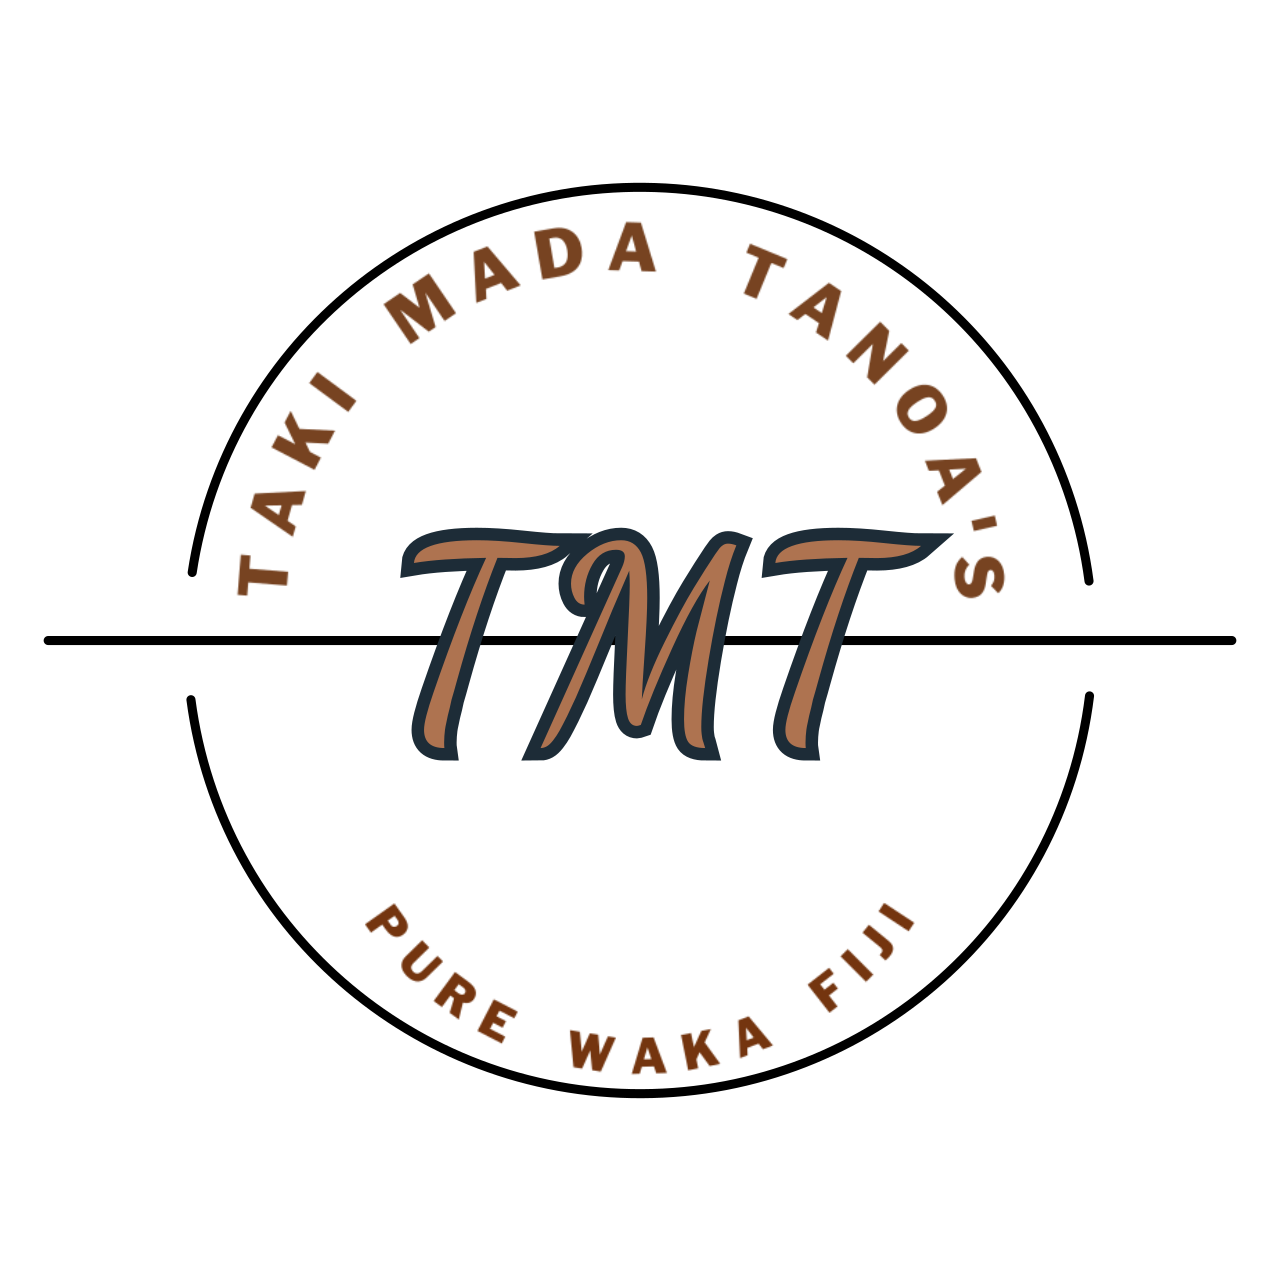 Taki Mada Tanoa's's logo